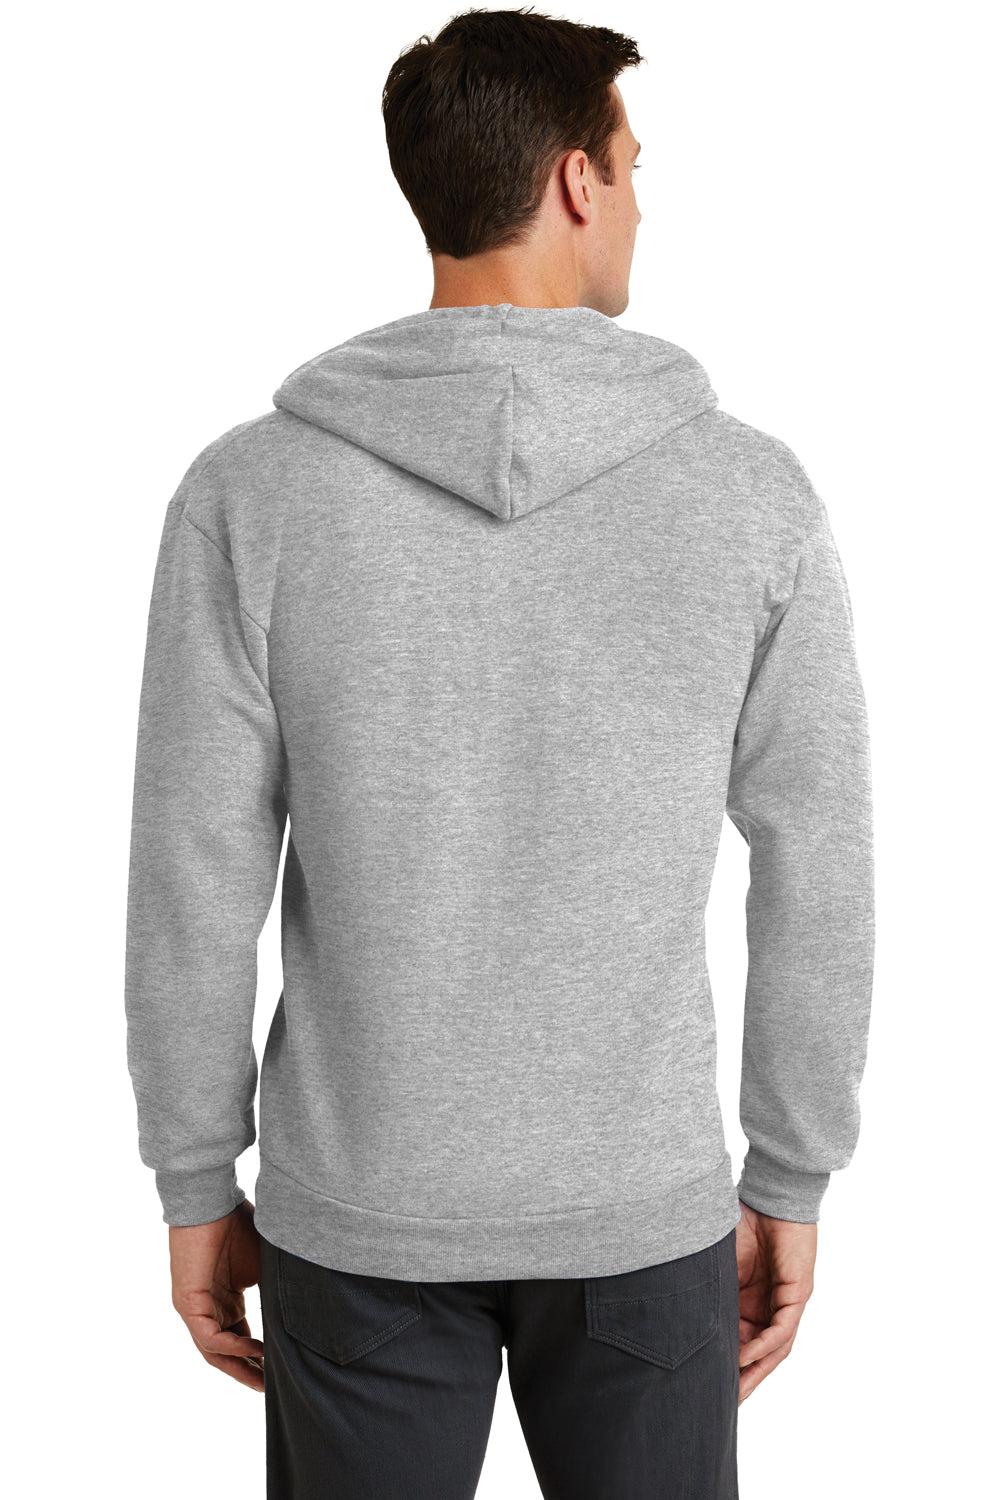 Port & Company PC78ZH Mens Core Fleece Full Zip Hooded Sweatshirt Hoodie Ash Grey Back